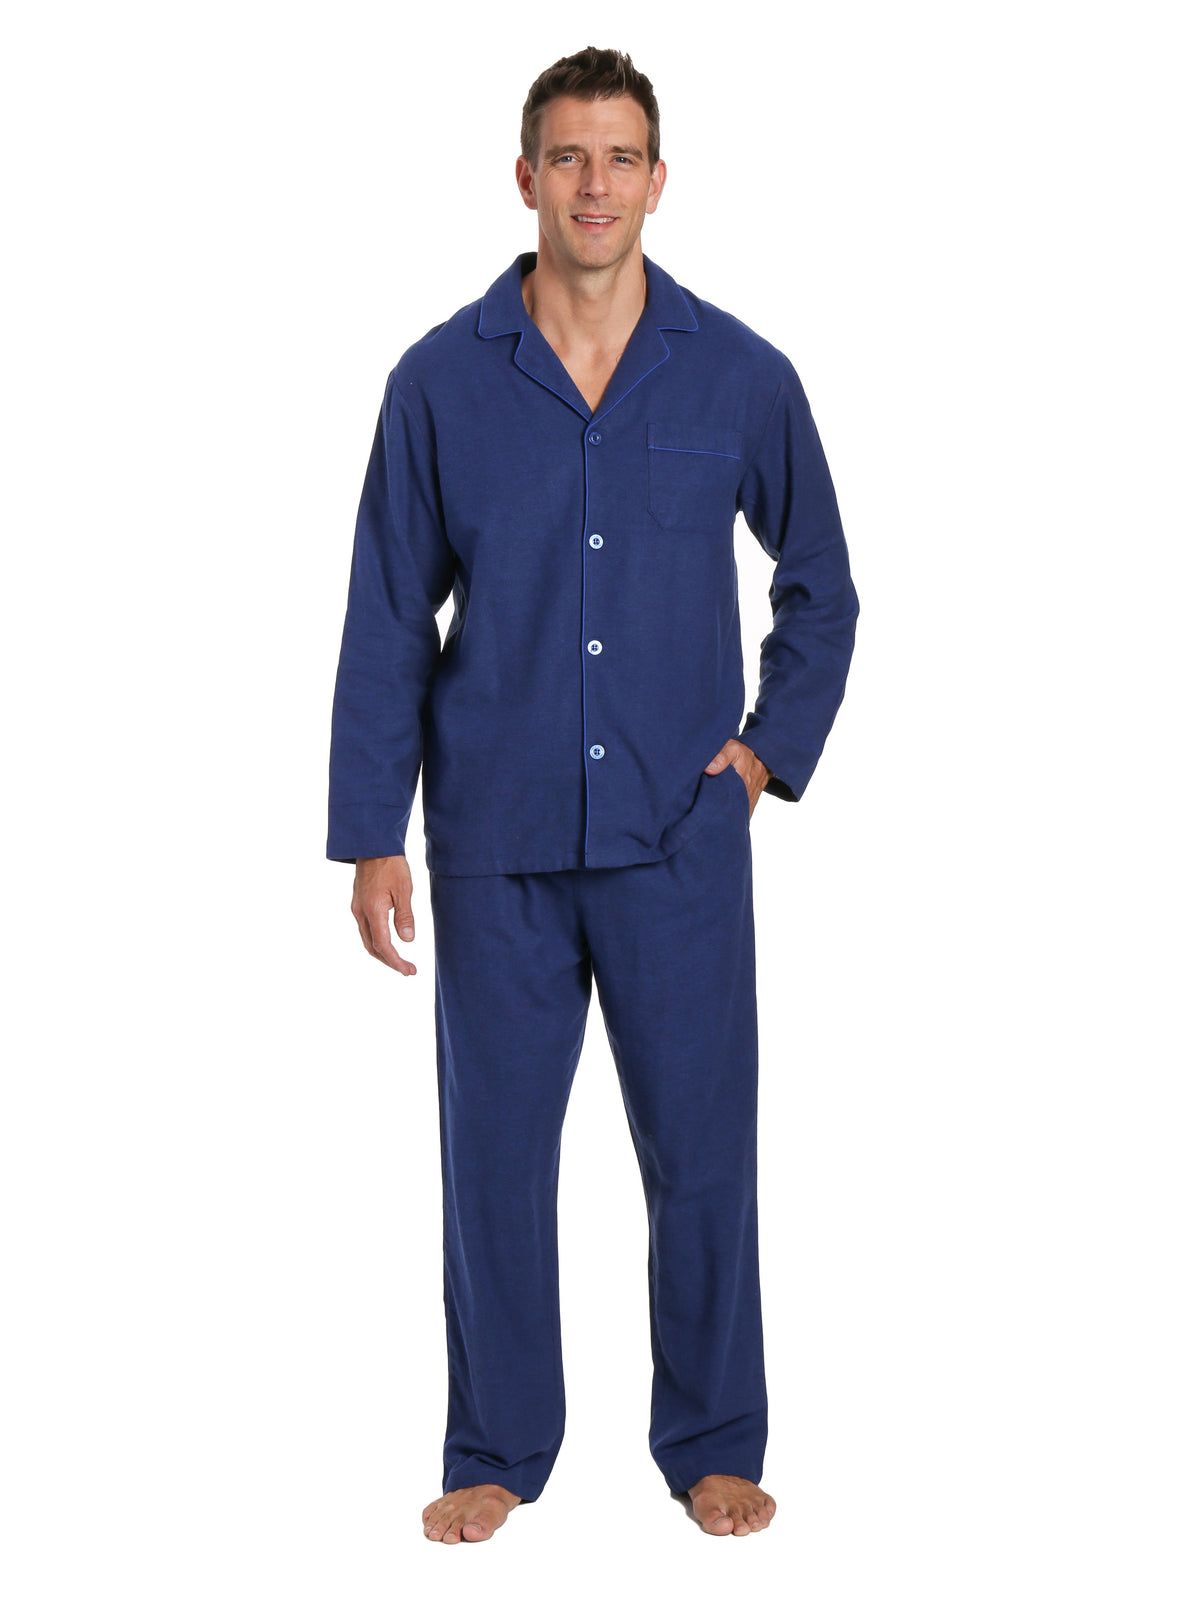 Men's 100% Cotton Flannel Pajama Set - Herringbone Navy